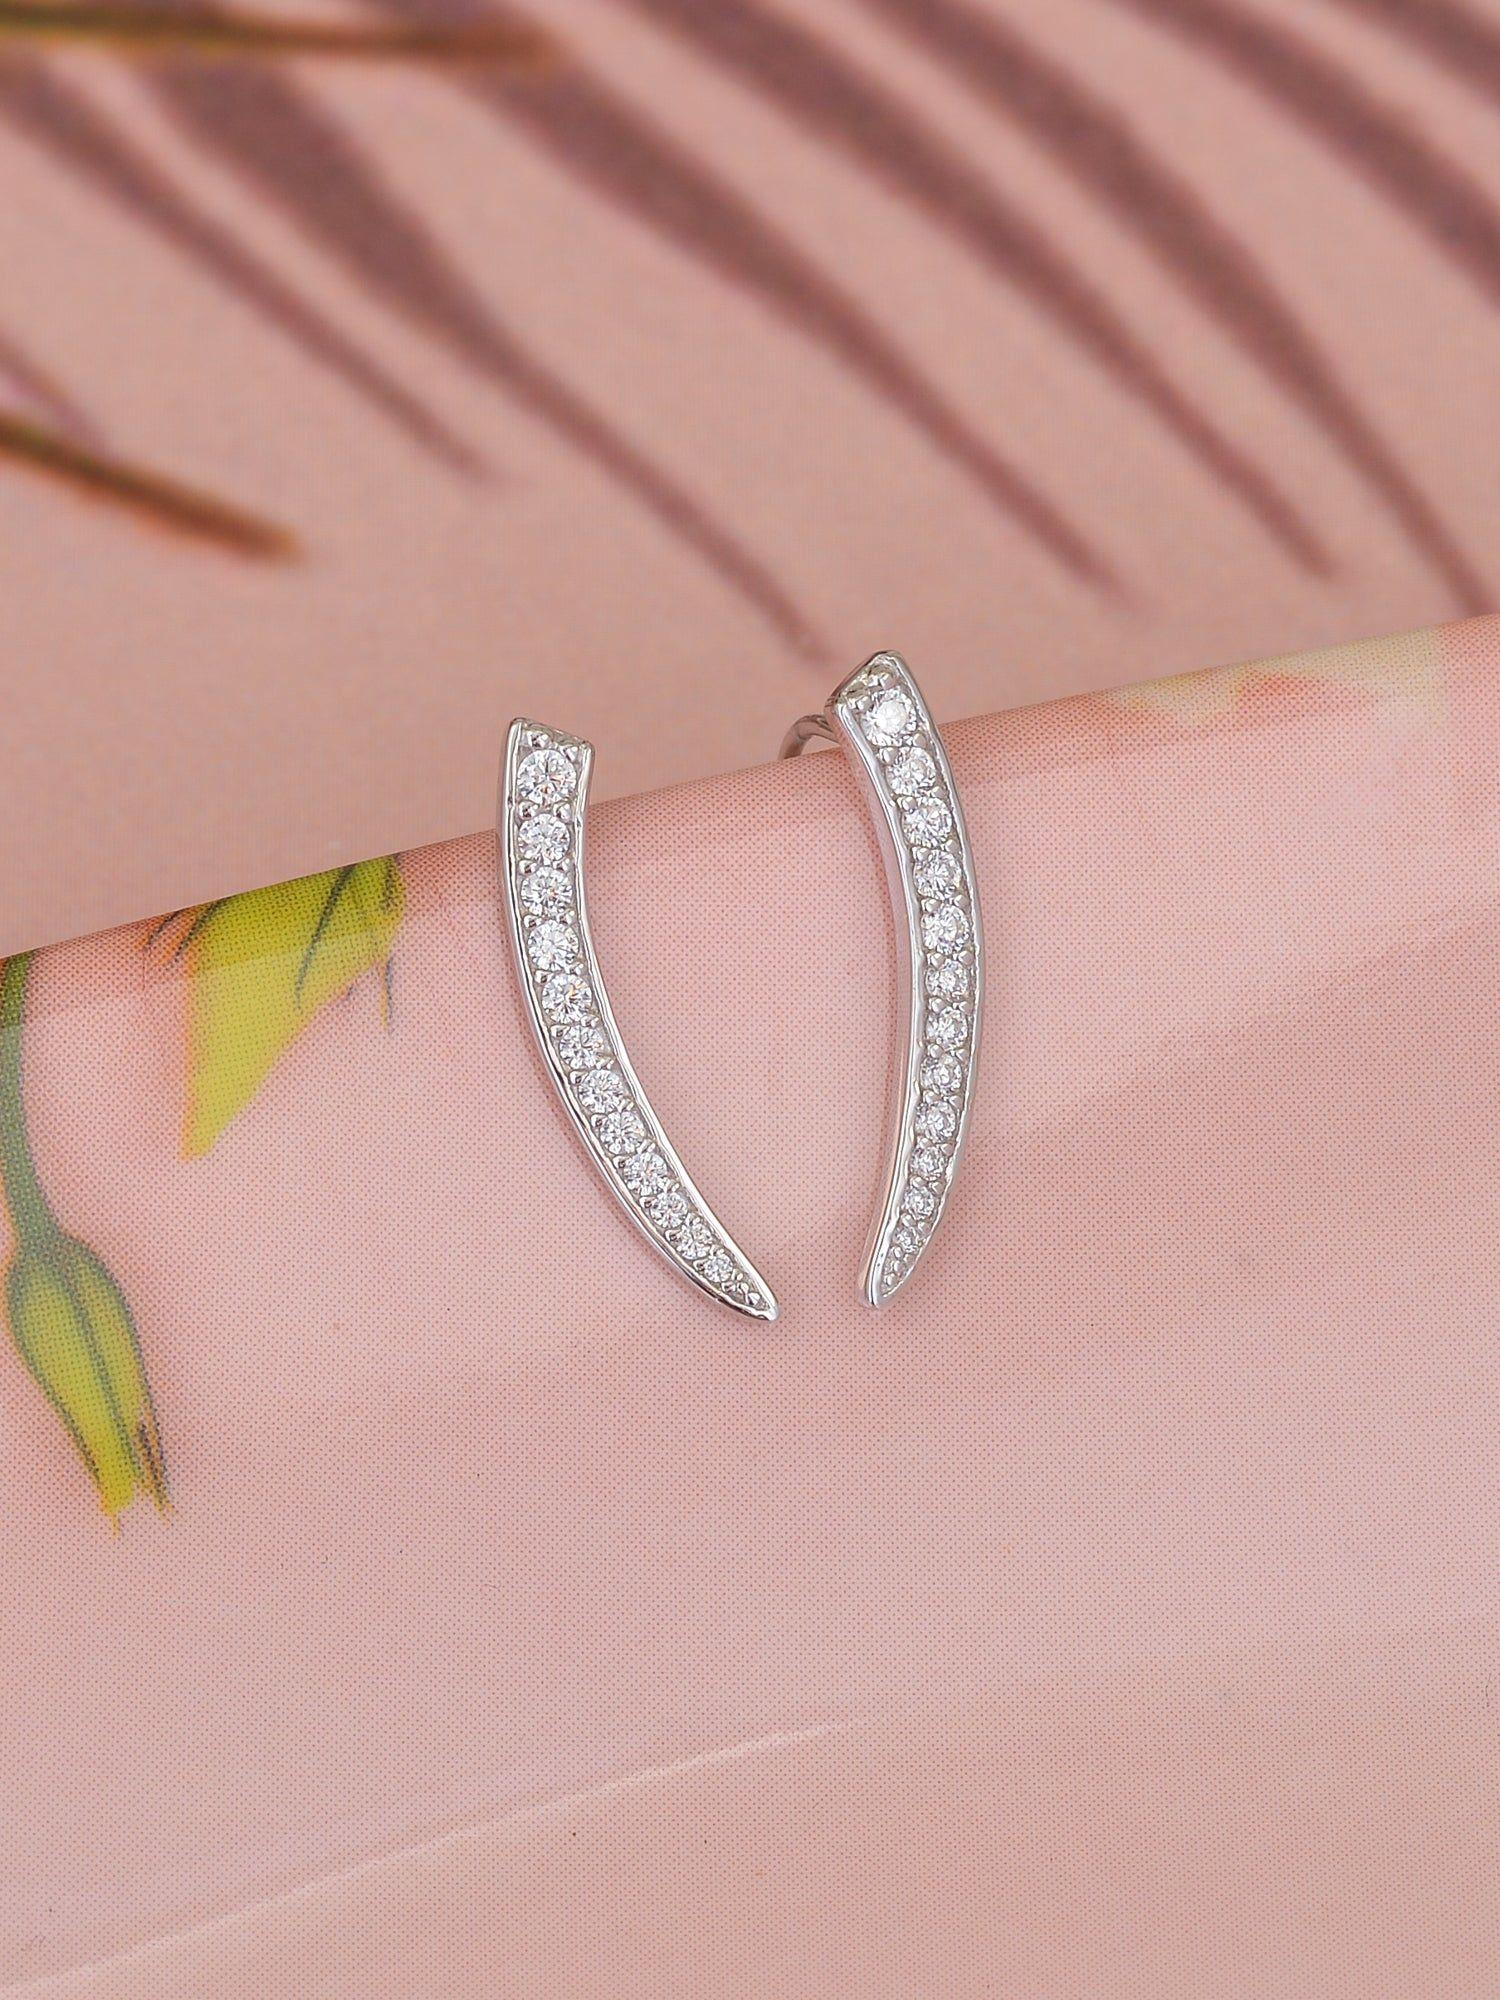 925 sterling silver american diamond climber earrings for women girls one size